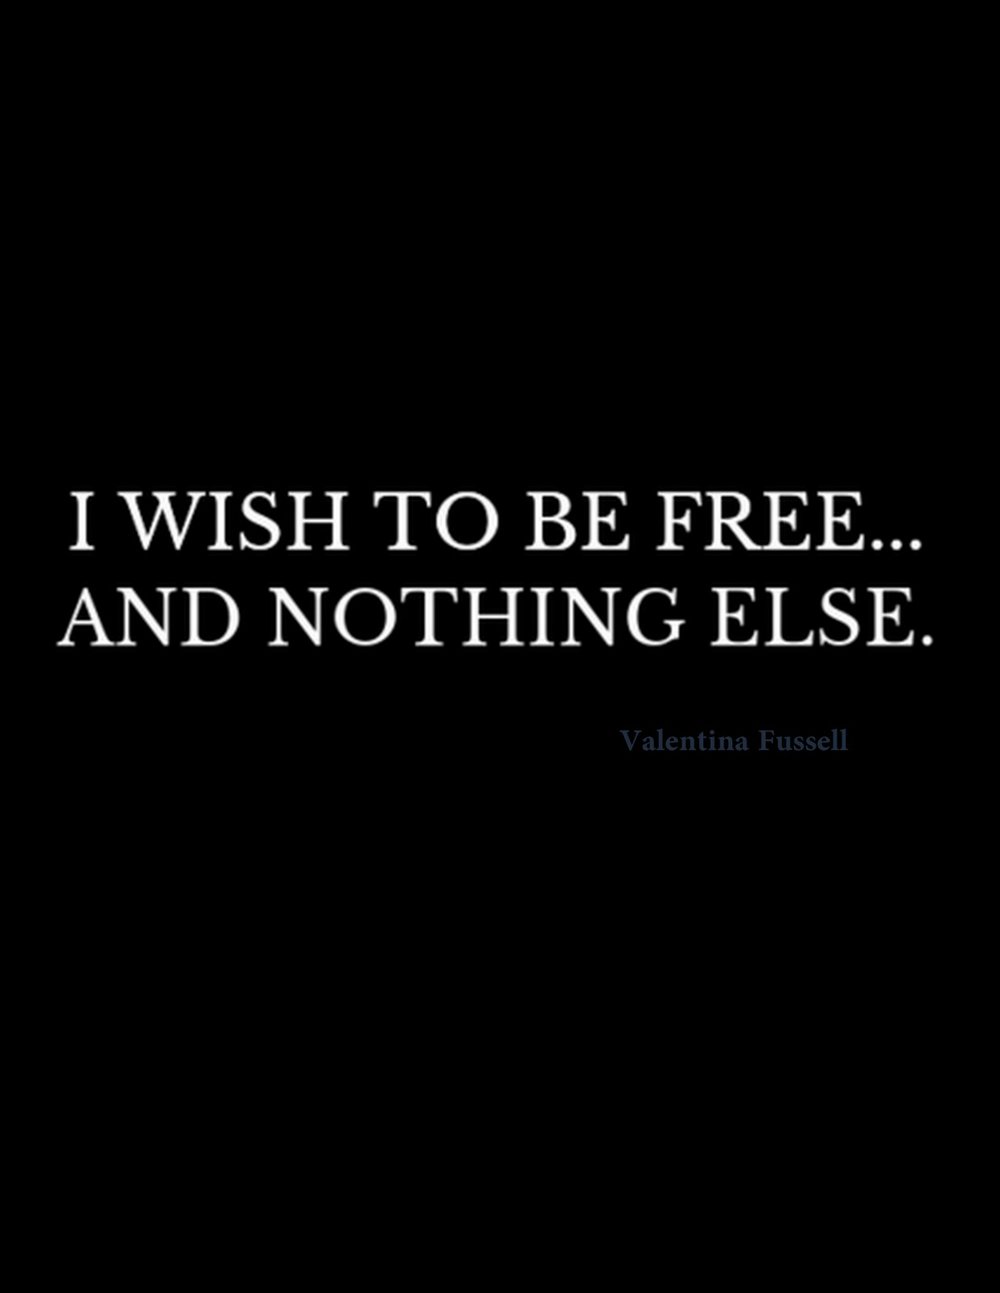 I Wish to be free...